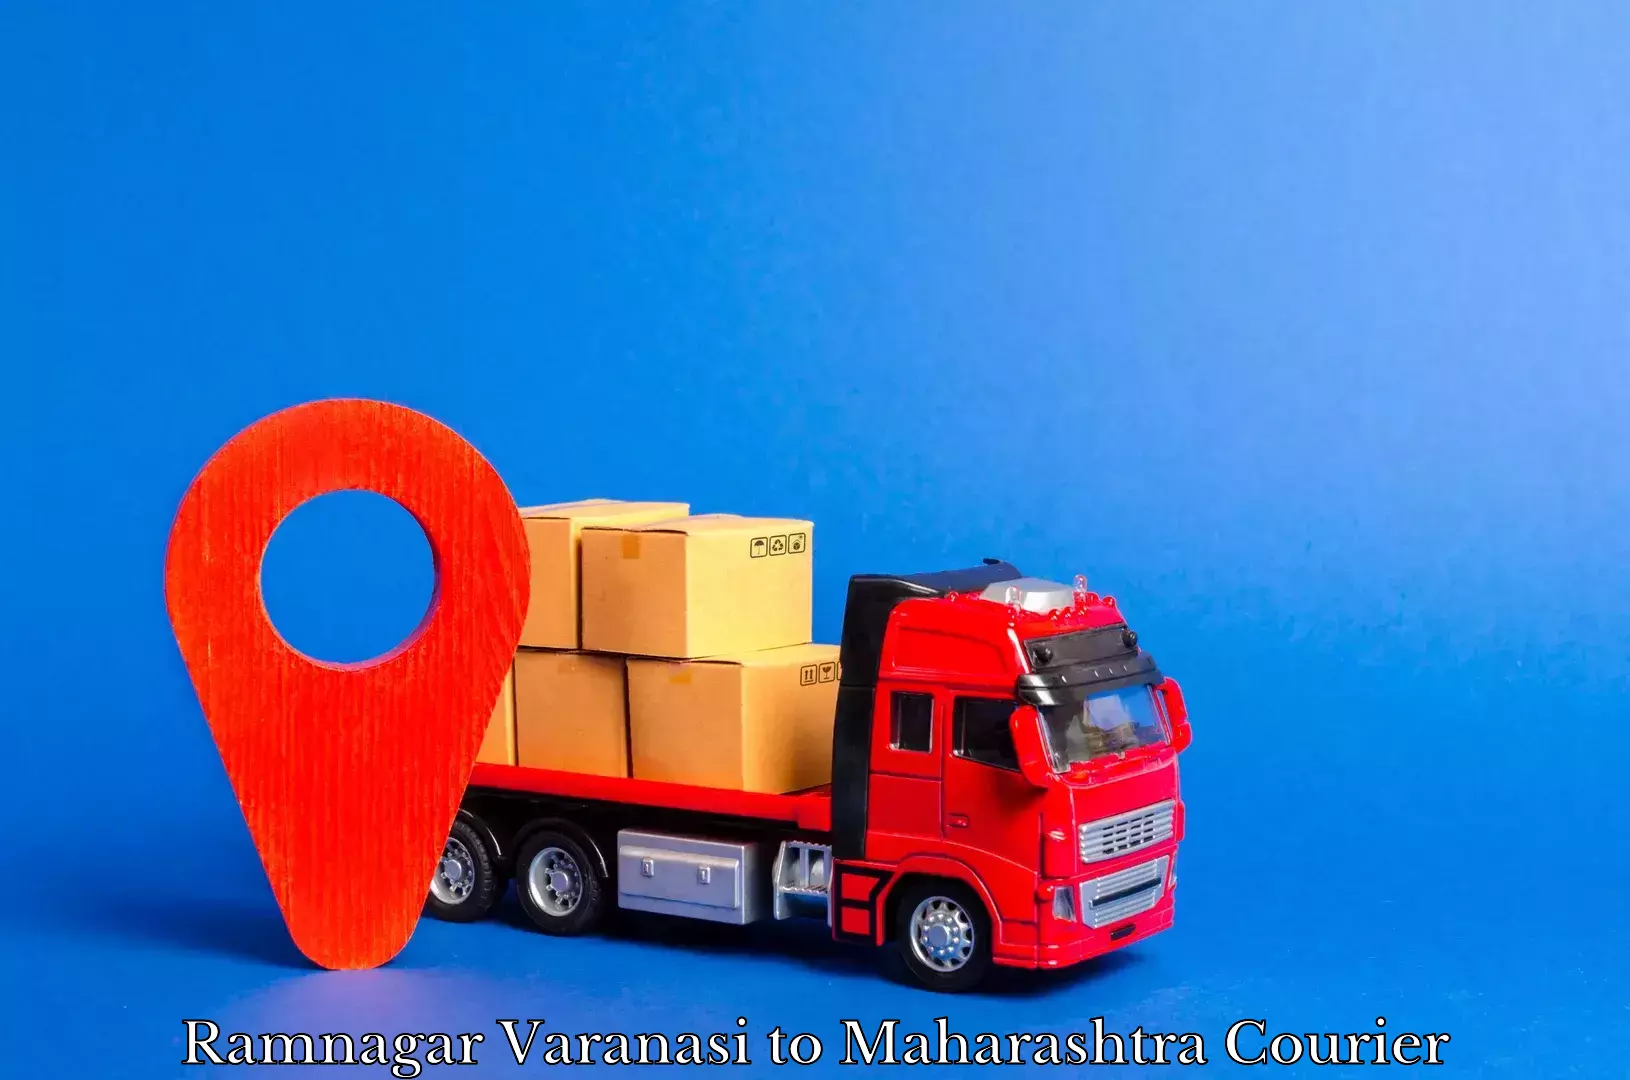 State-of-the-art courier technology Ramnagar Varanasi to Maharashtra